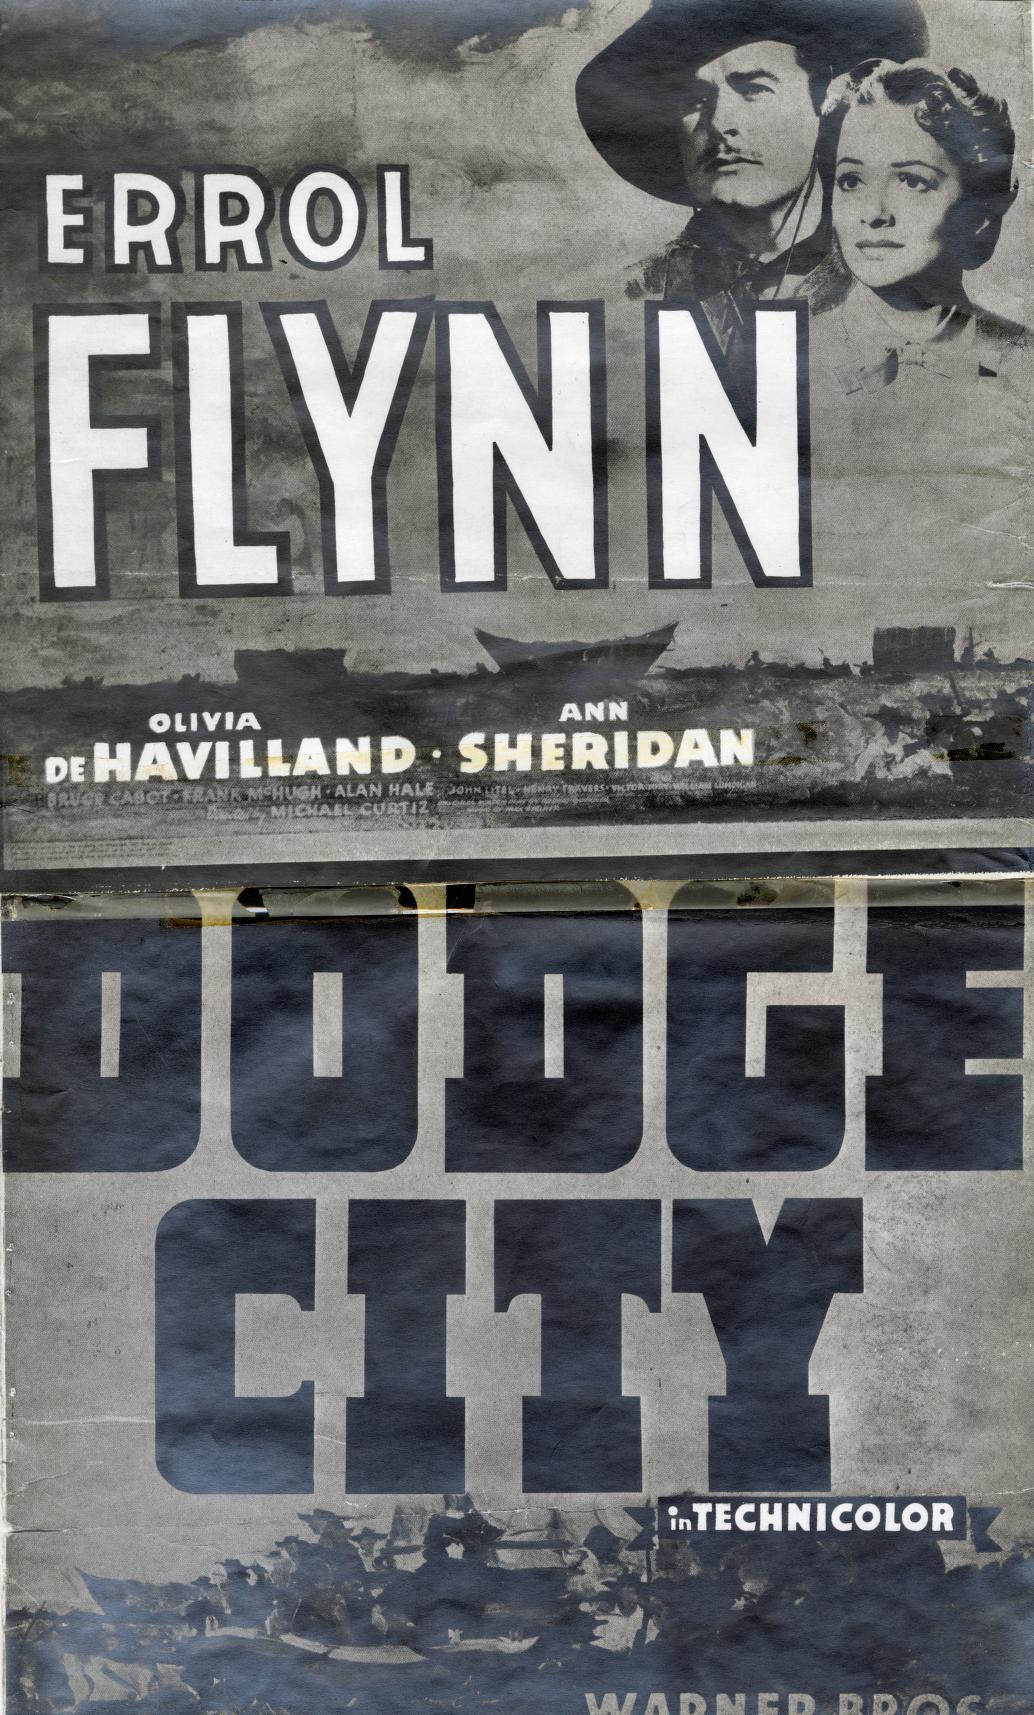 Dodge City (Warner Bros.)